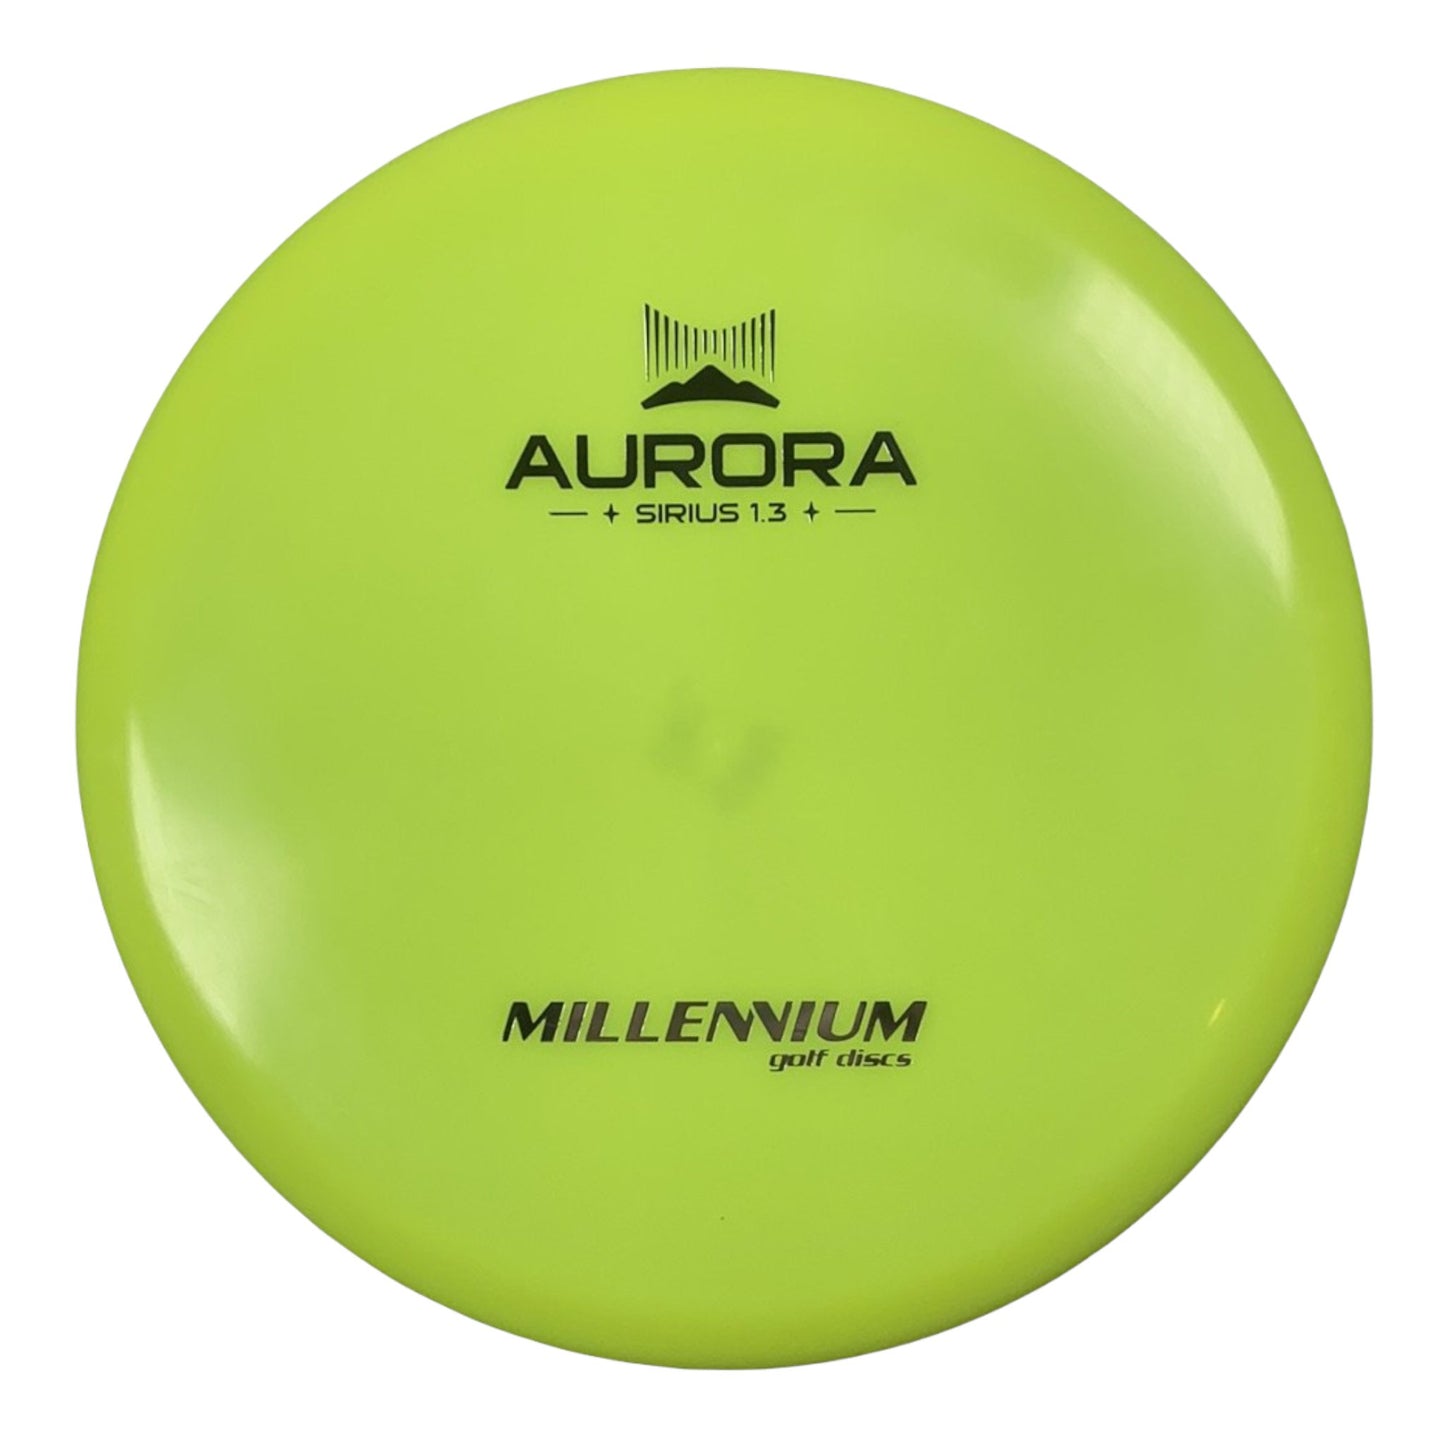 Millennium Golf Discs Aurora MS | Sirius | Neon/Silver 172g Disc Golf